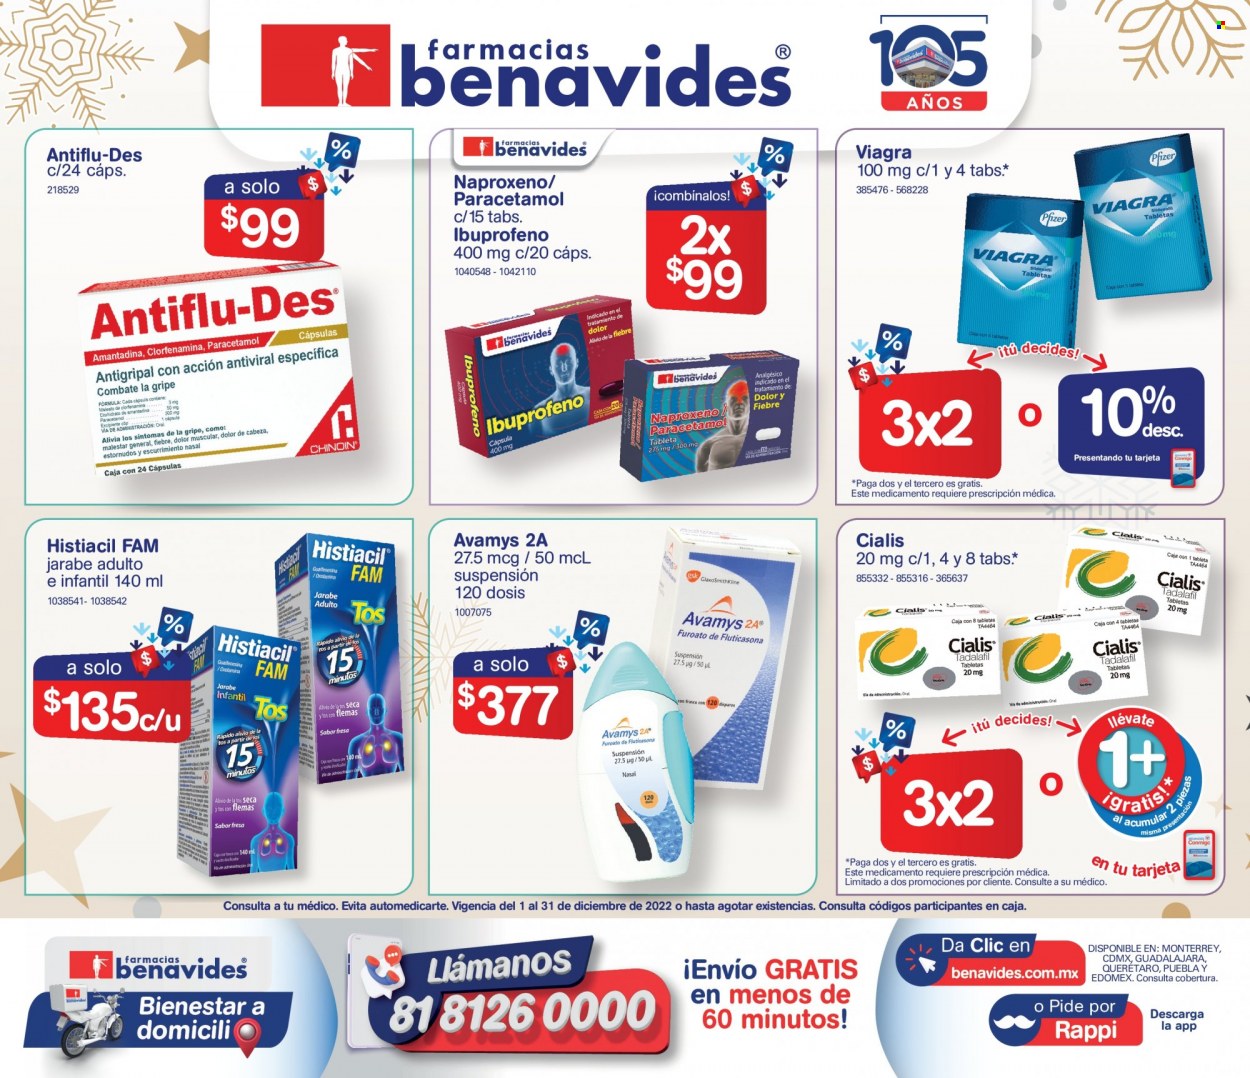 thumbnail - Folleto actual Farmacias Benavides - 1.12.2022 - 31.12.2022 - Ventas - járabe, Paracetamol, Ibuprofeno, Antiflu-Des, Histiacil, Viagra. Página 1.